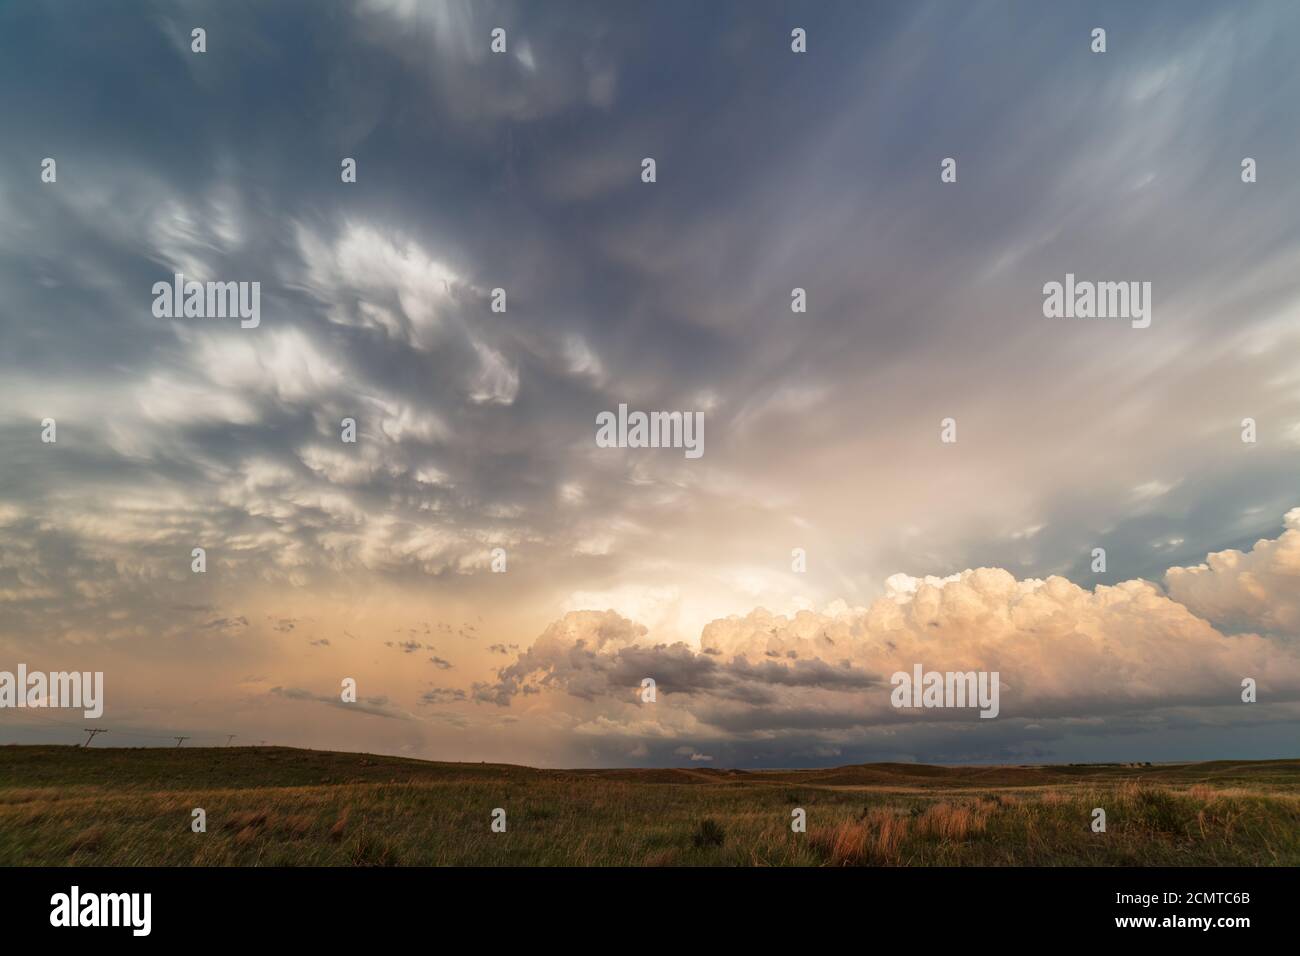 Dramatic sunset sky with storm clouds near Gordon, Nebraska Stock Photo